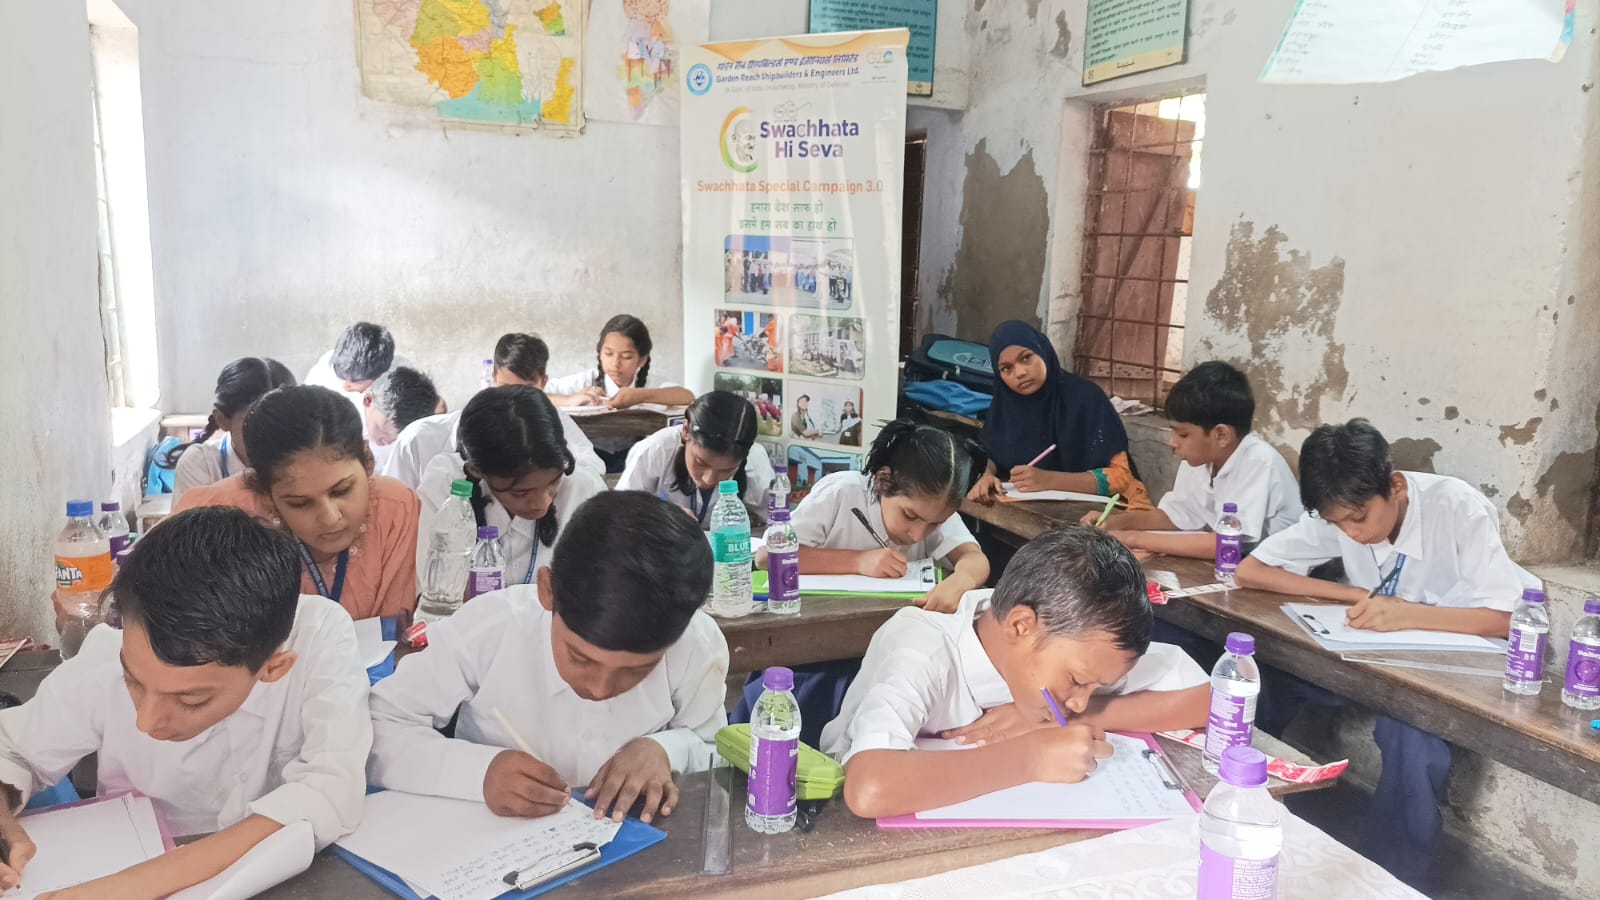 Hindi Essay Writing on Swachhata organized by GRSE at Barham Hindi Primary School on 16 Oct 23